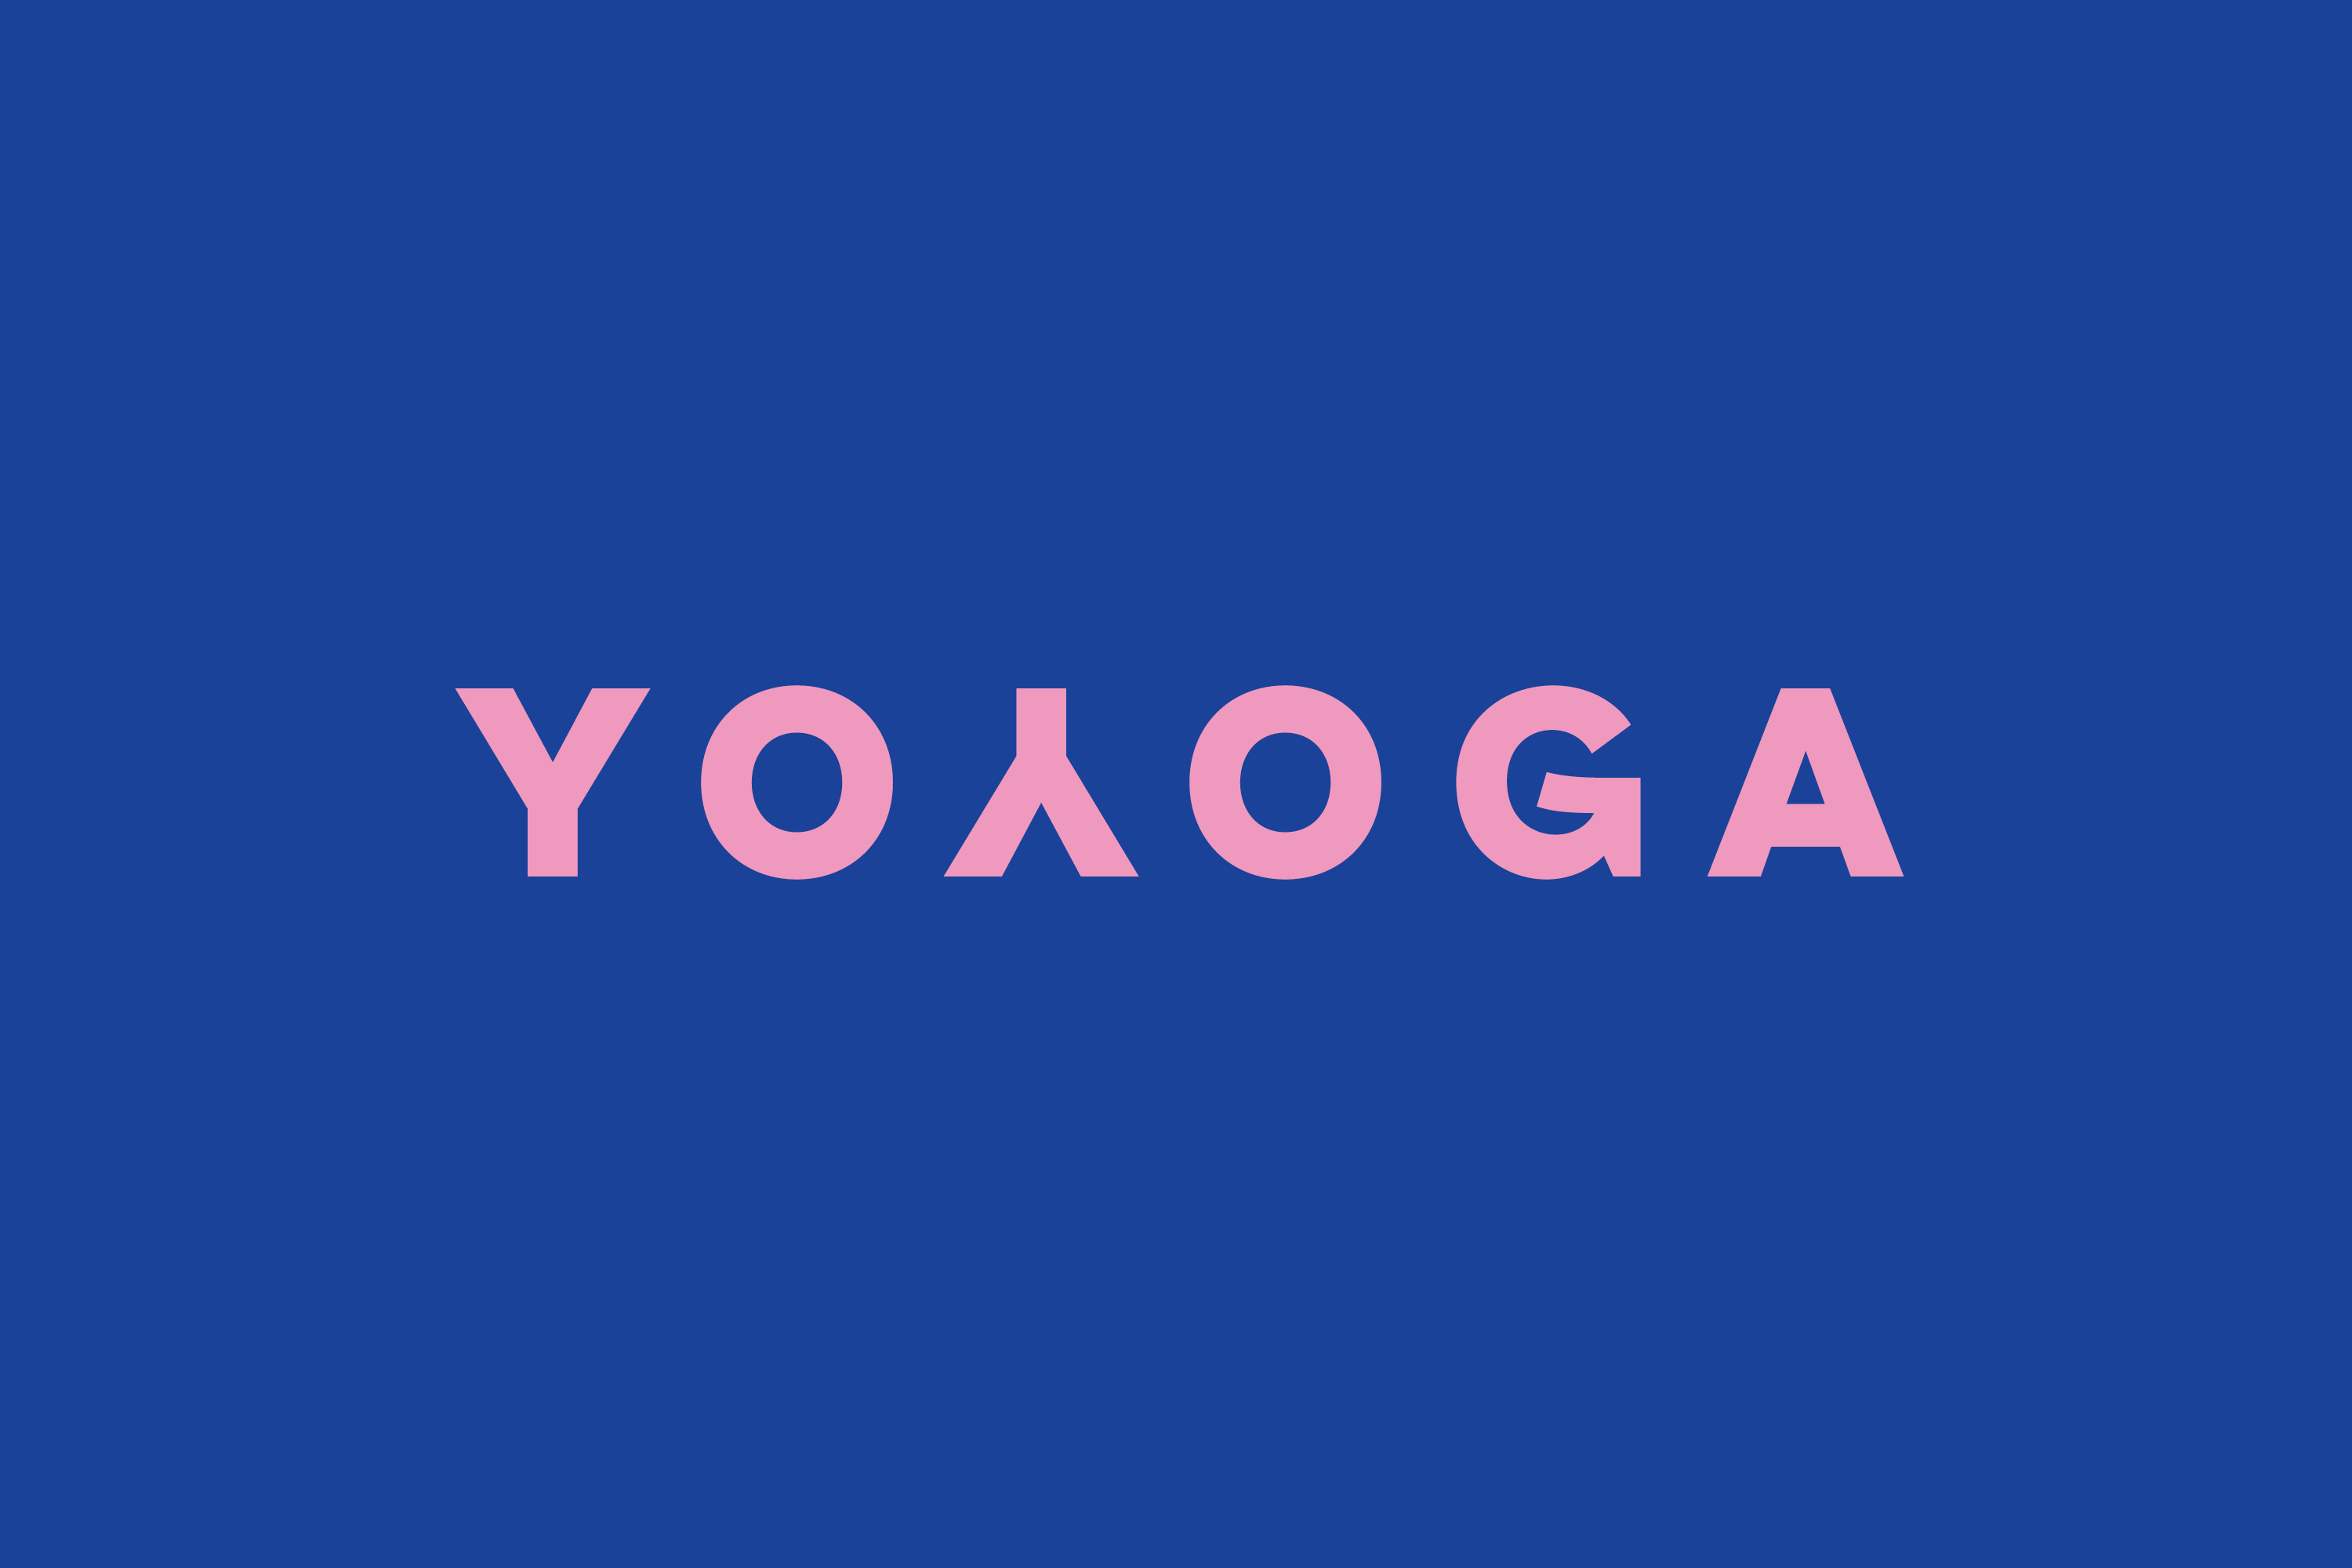 Cover image: Yoyoga